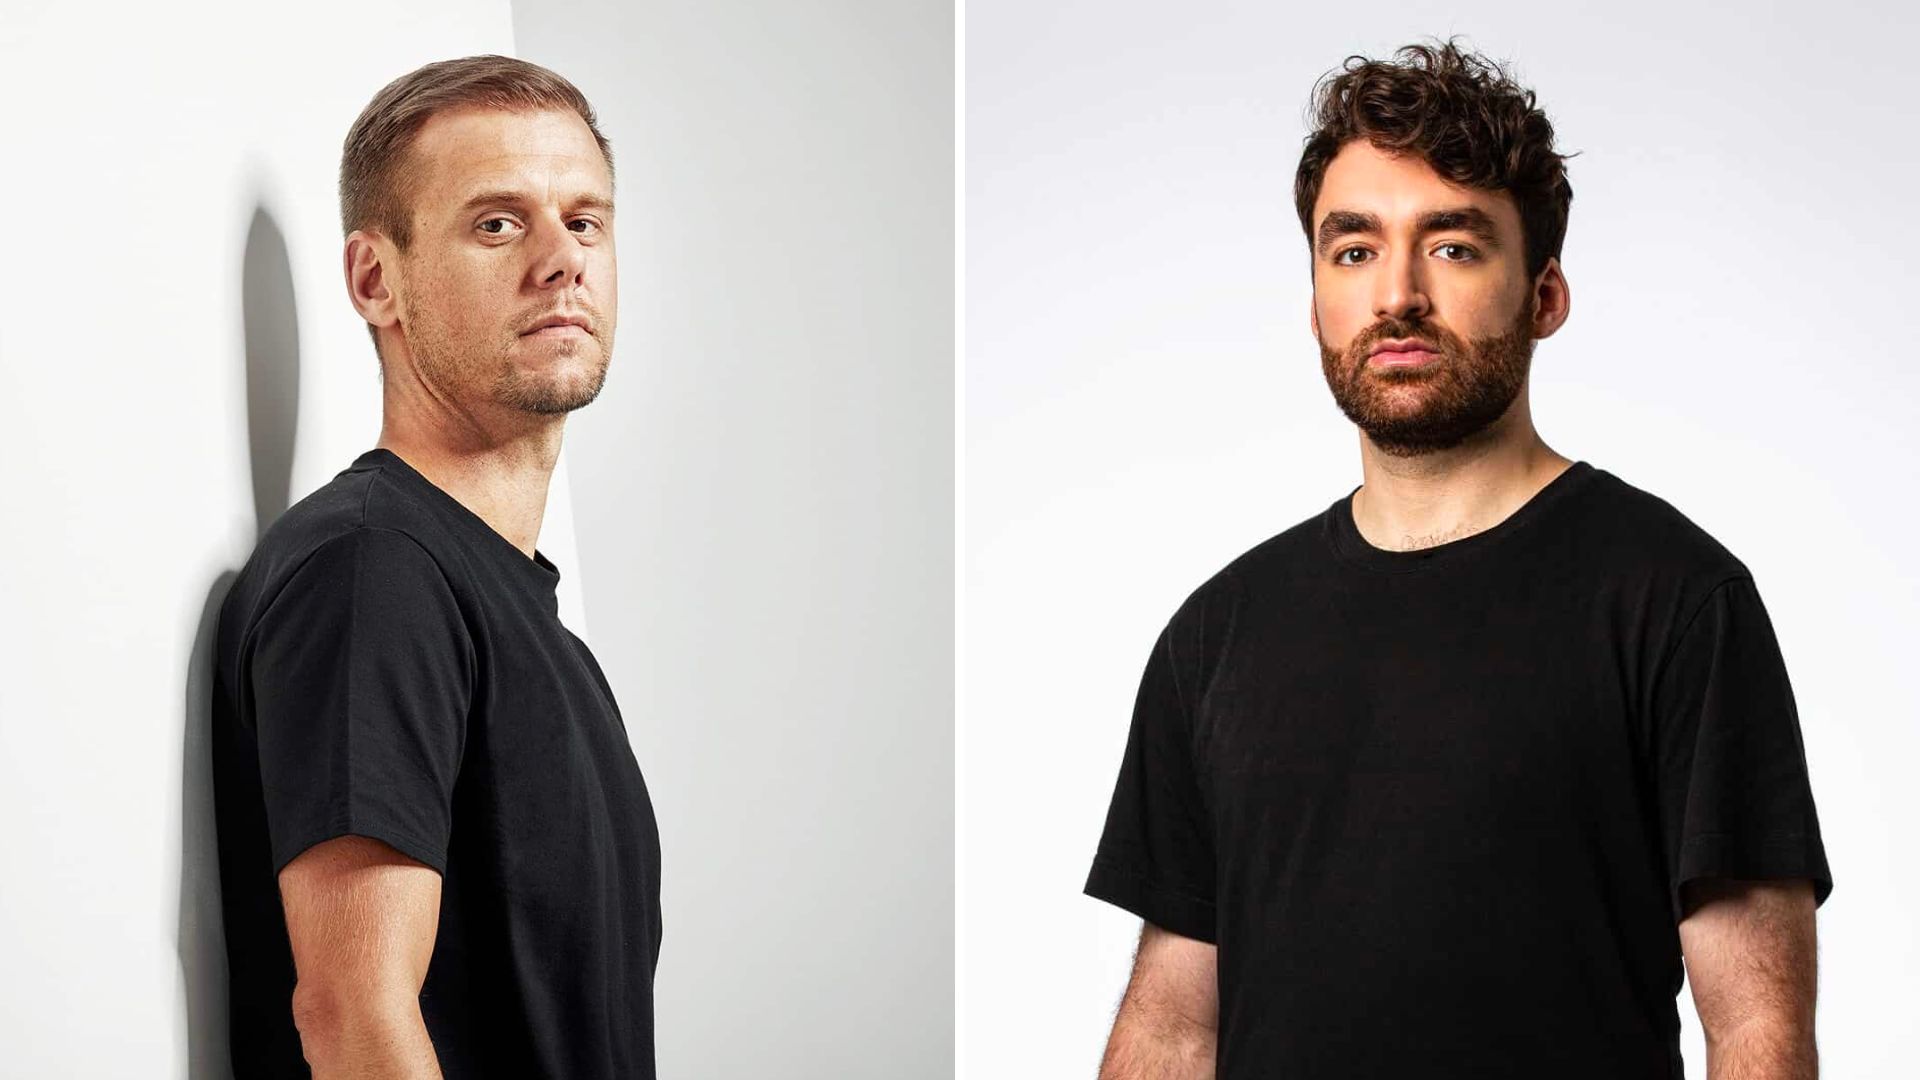 Armin van Buuren & Oliver Heldens tease fans with “multiple” collaborations in the works